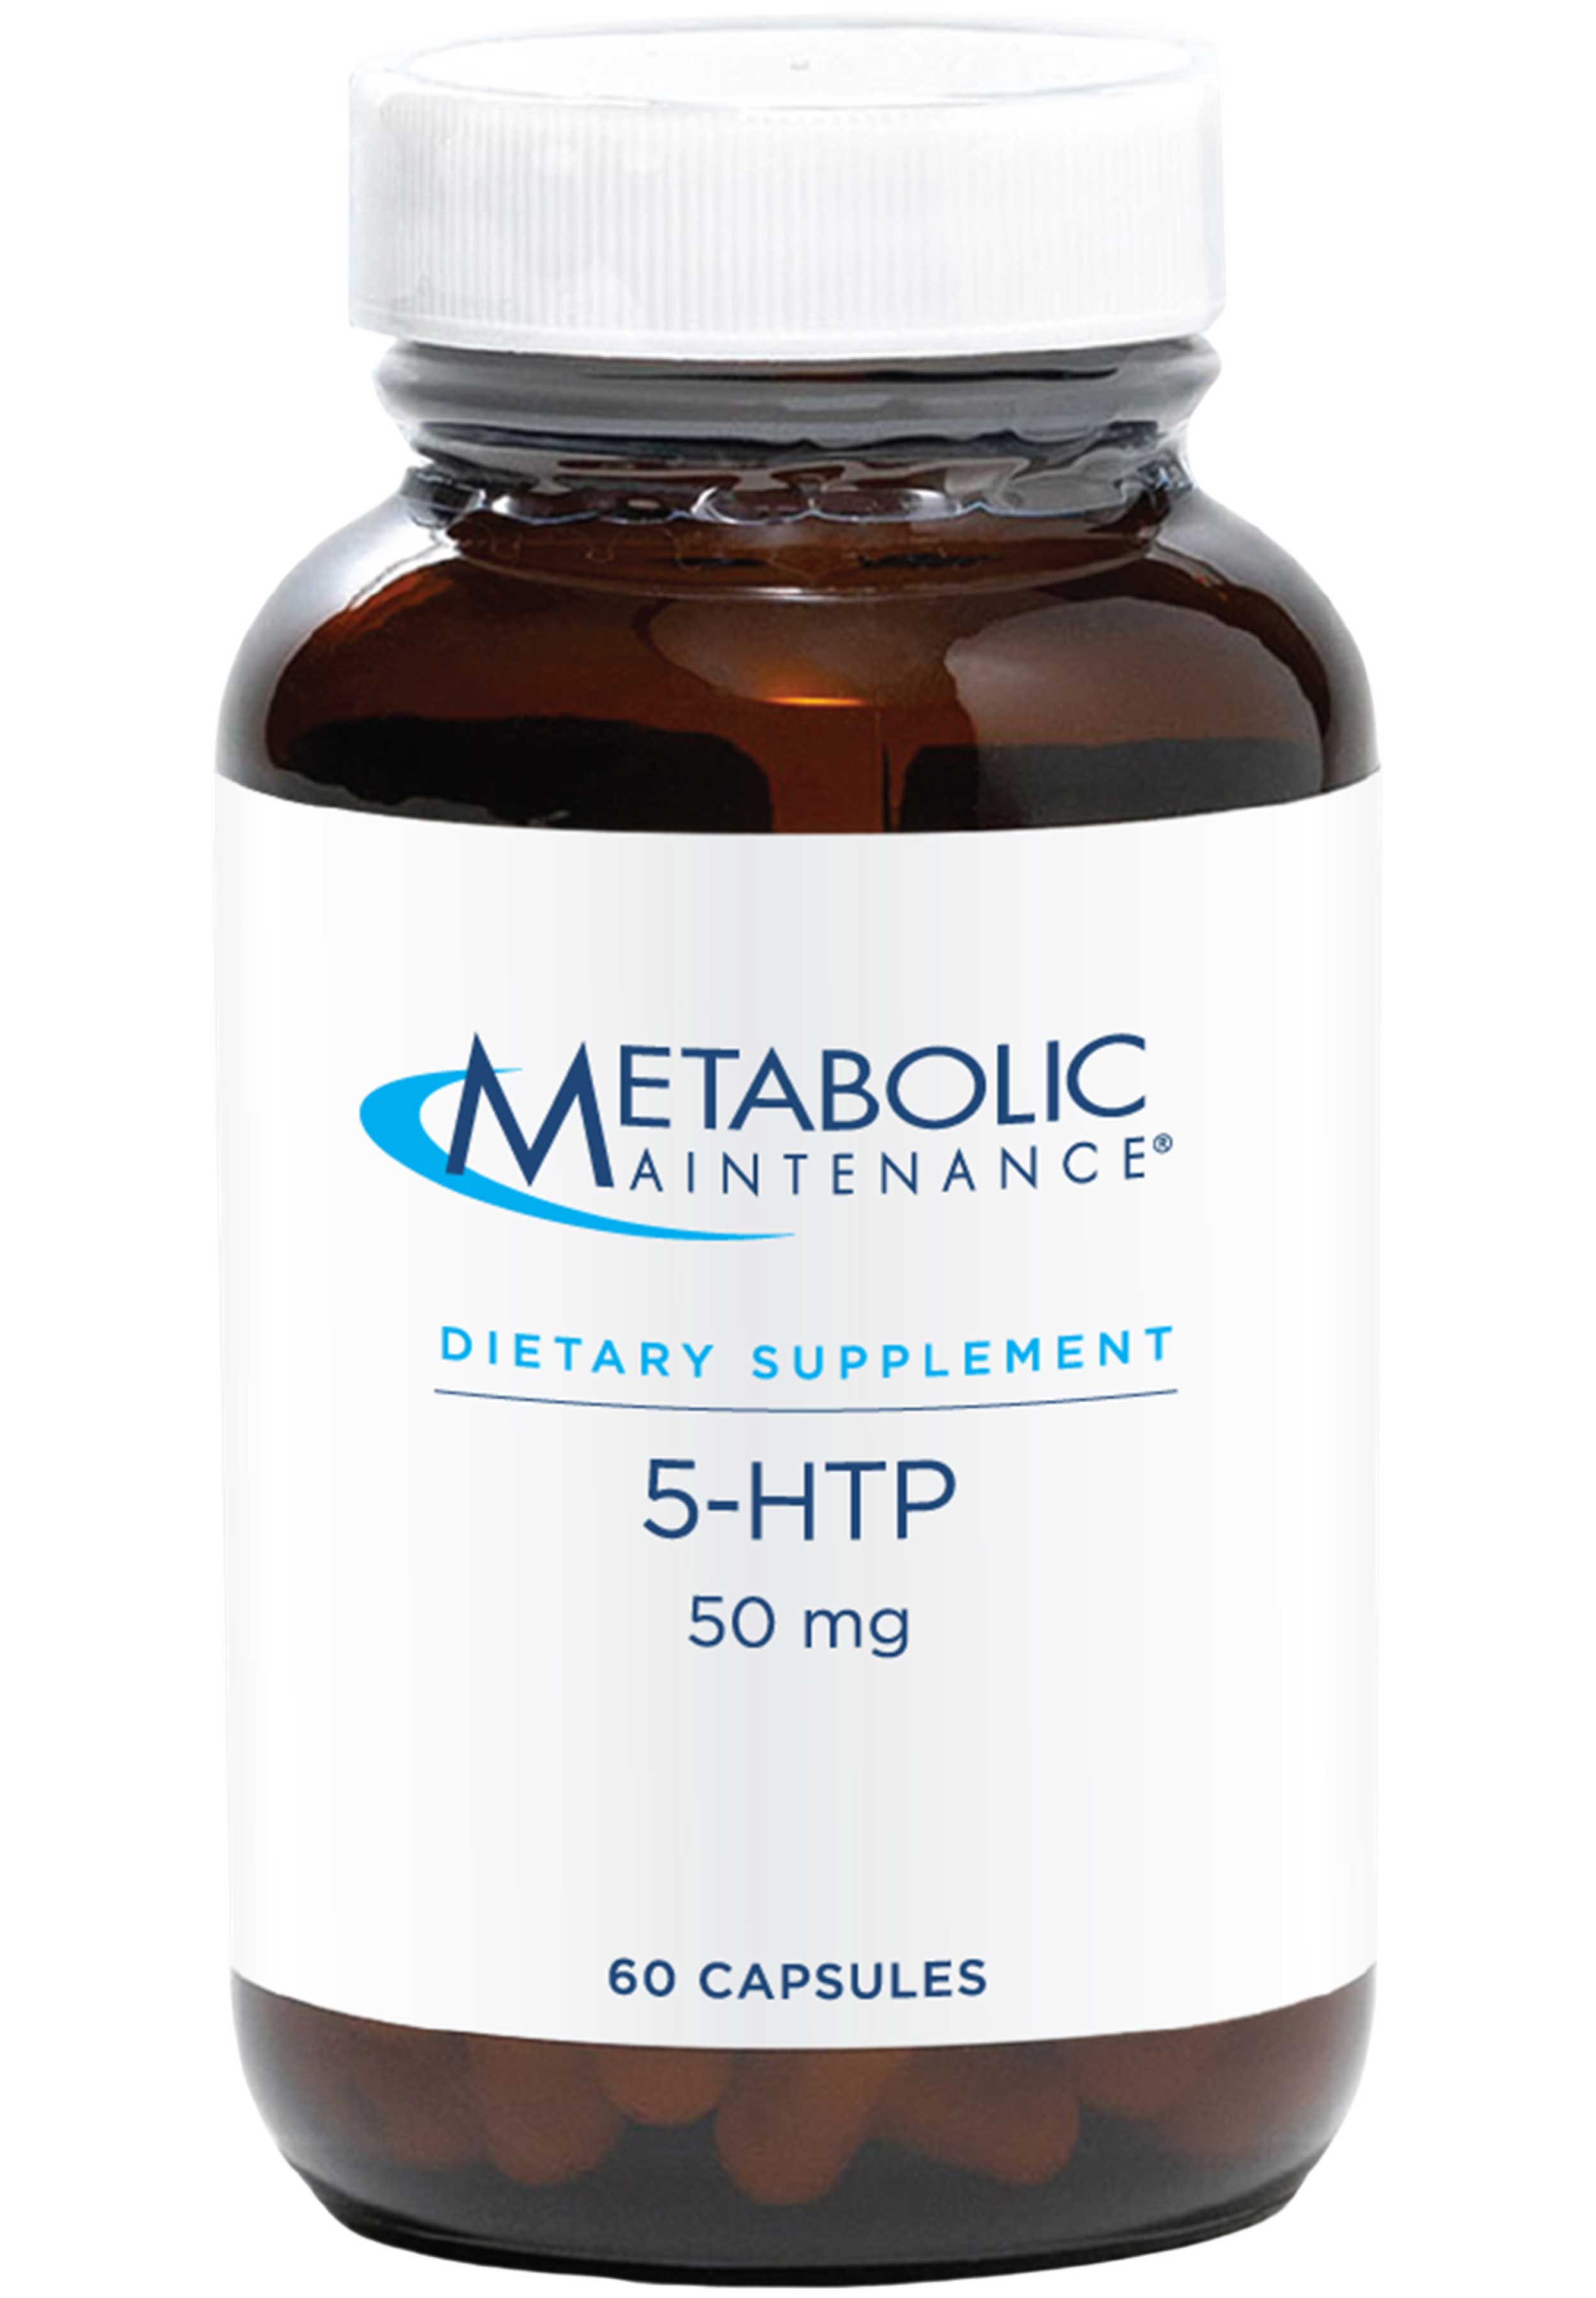 Metabolic Maintenance 5-HTP 50 mg